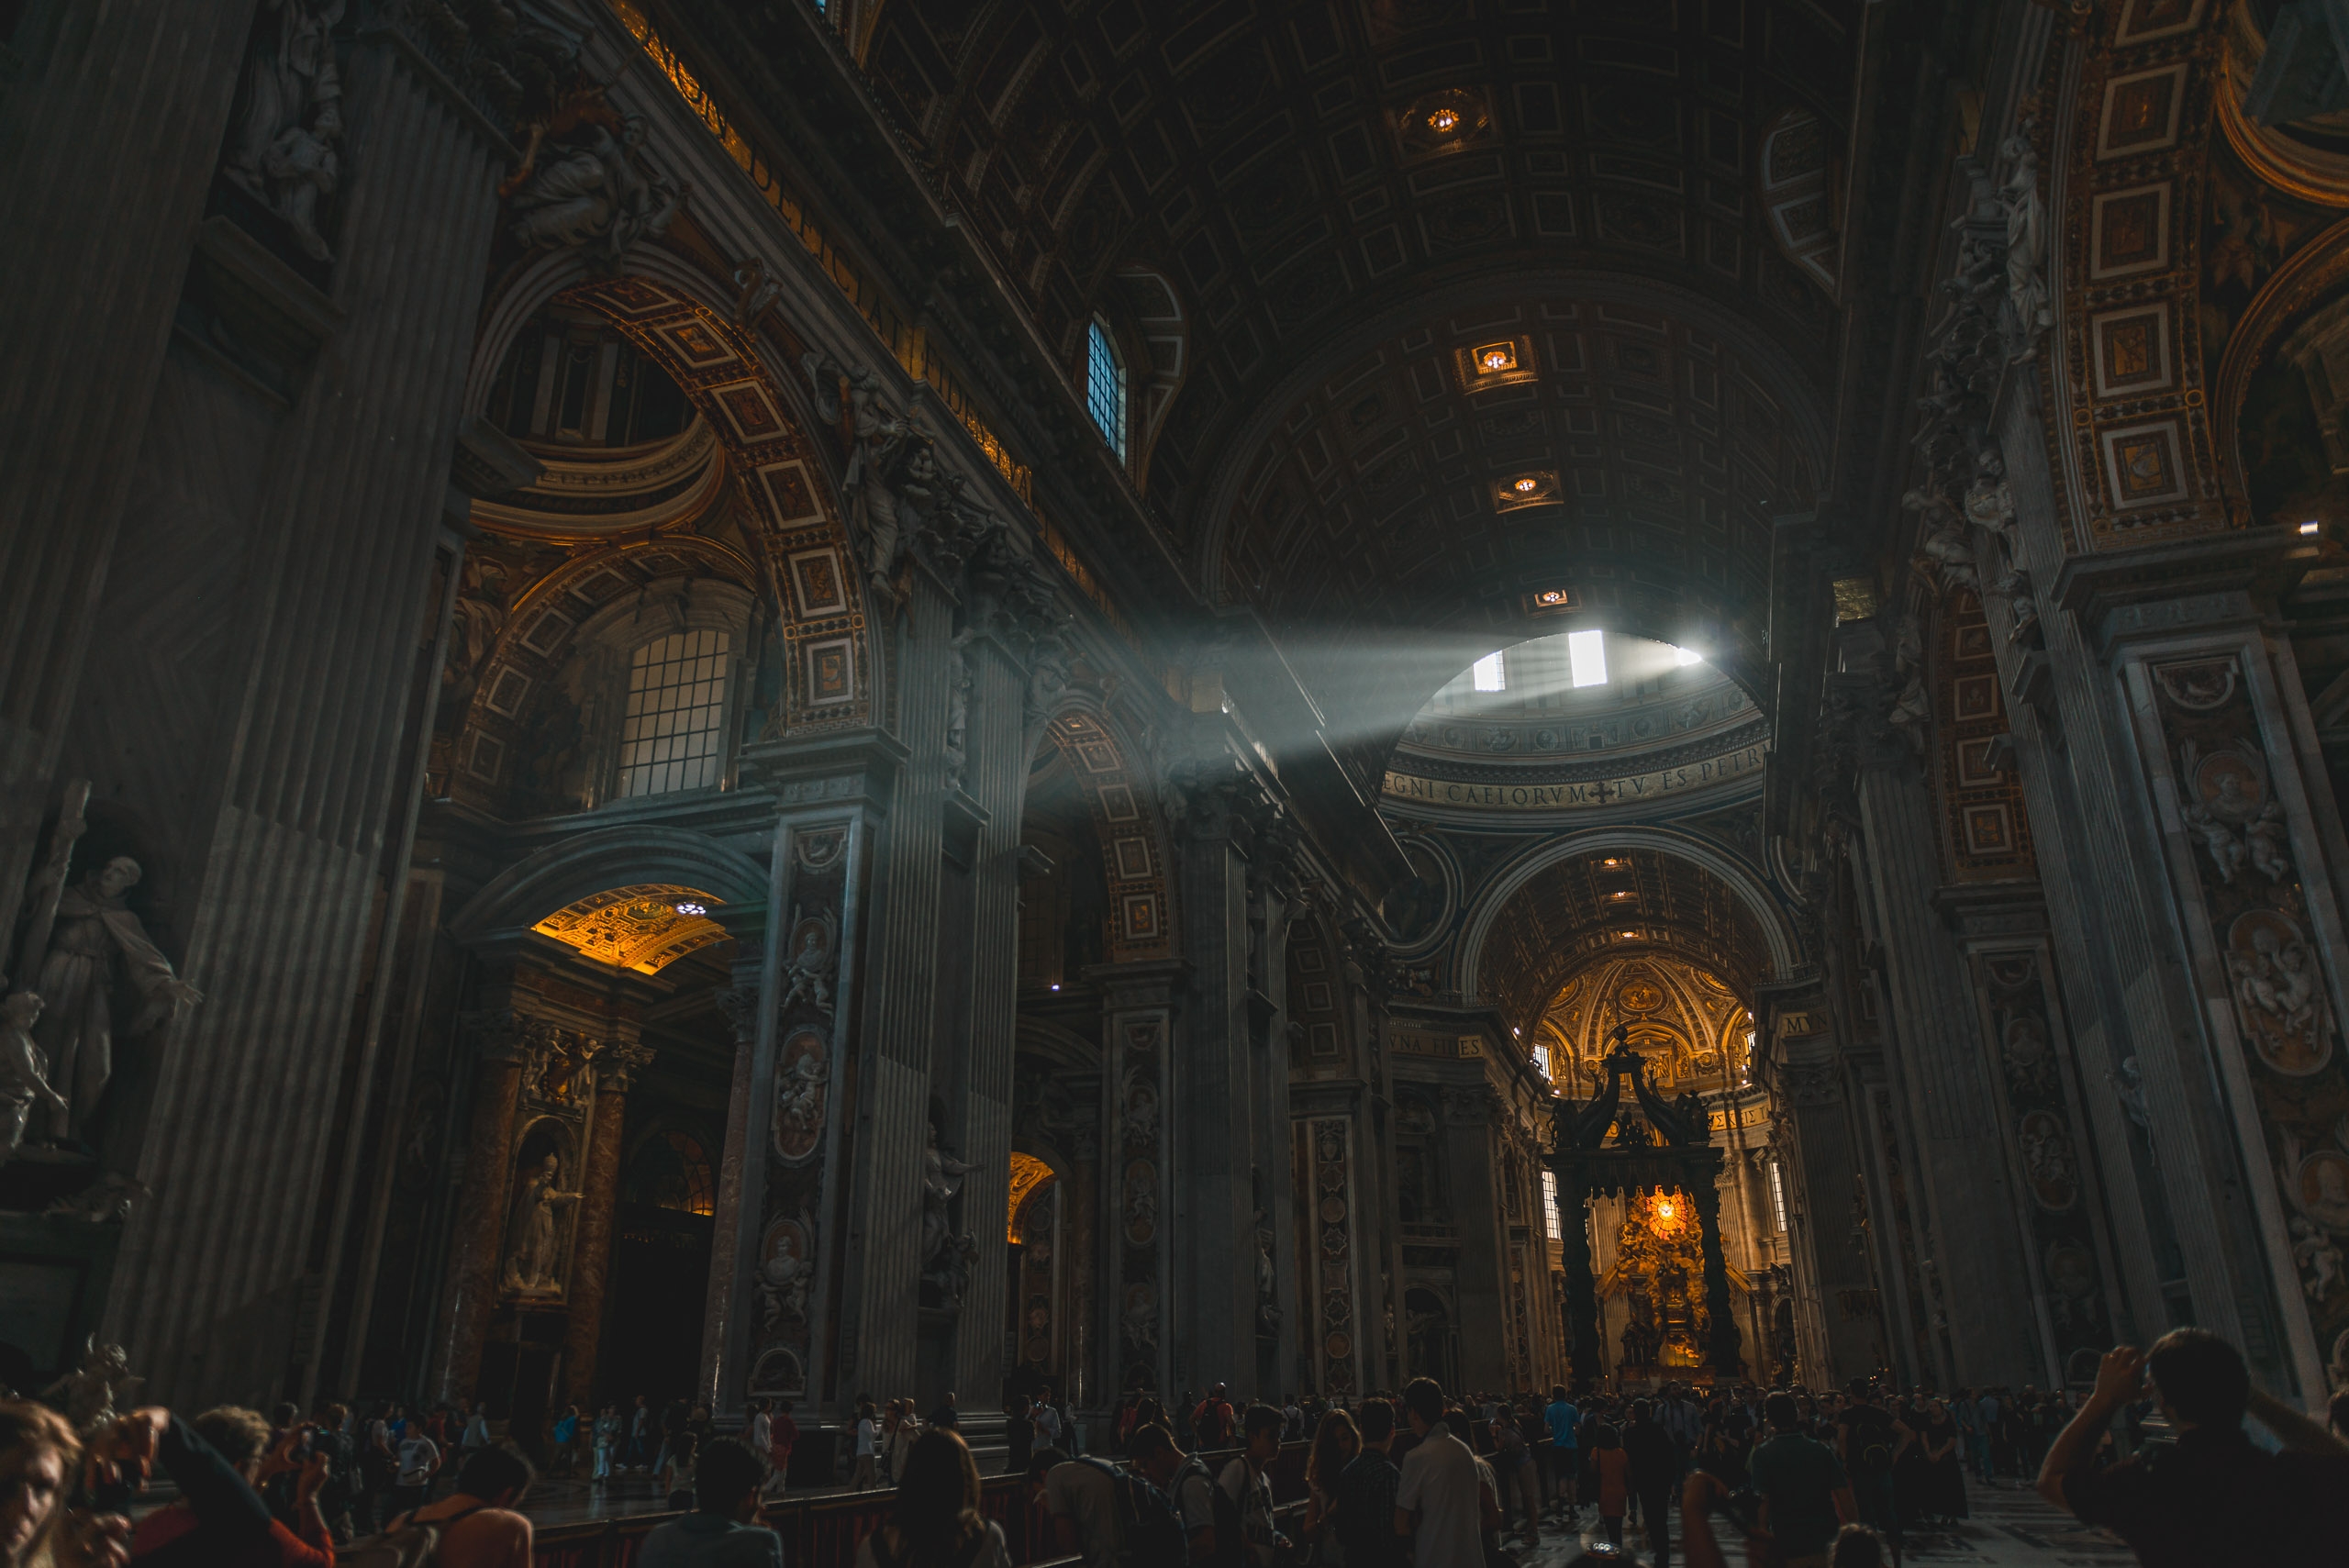 Inside St Peters Basilica